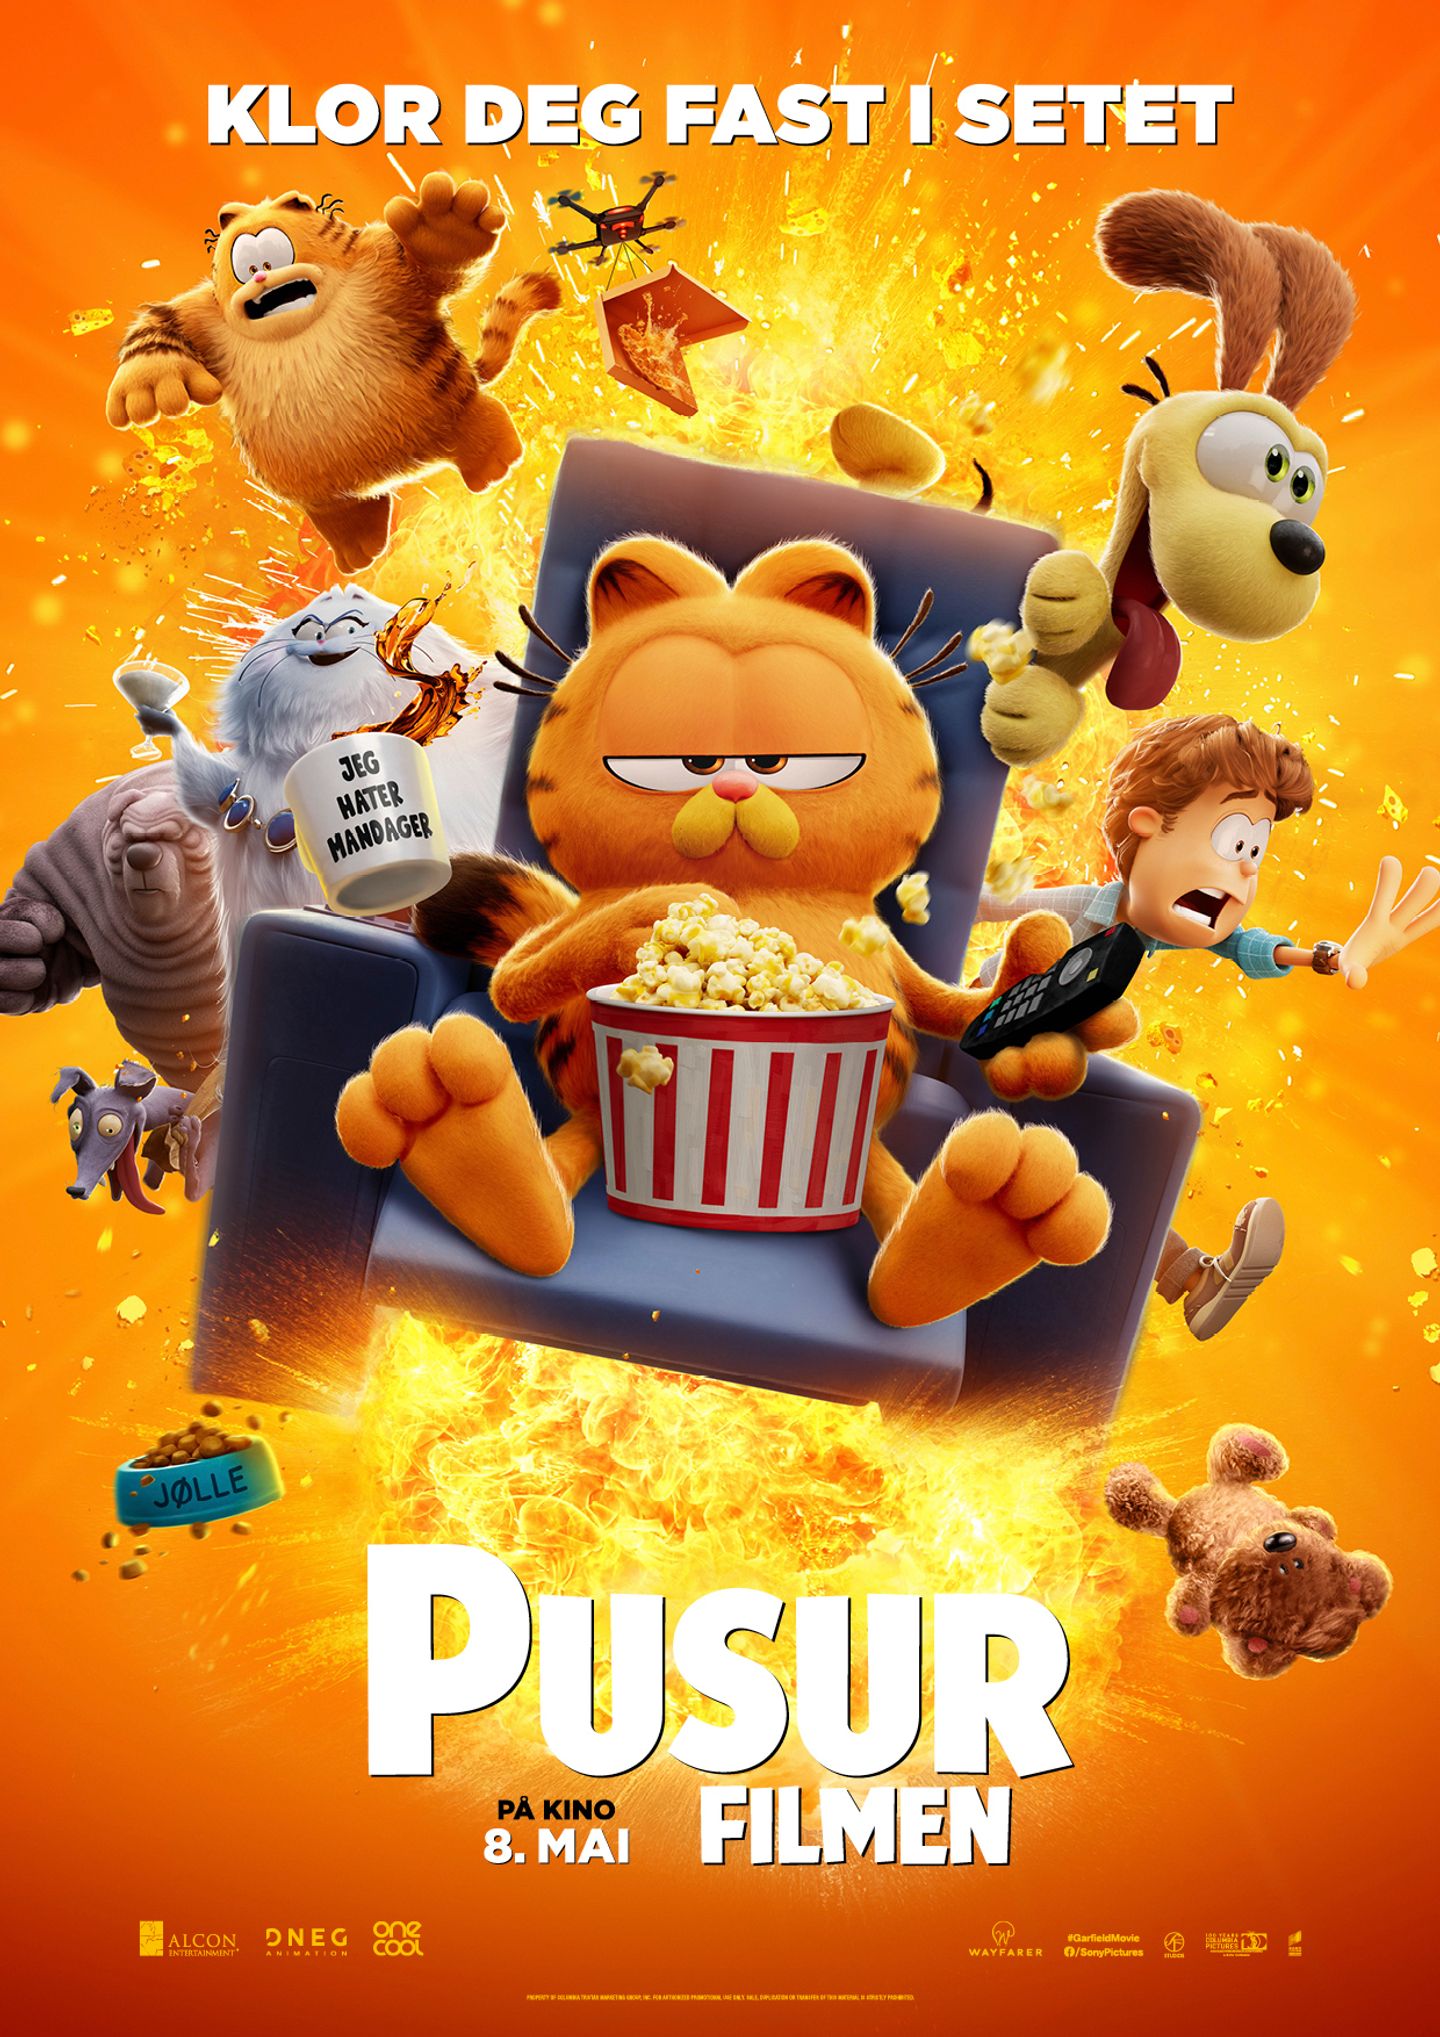 Pusur-filmen